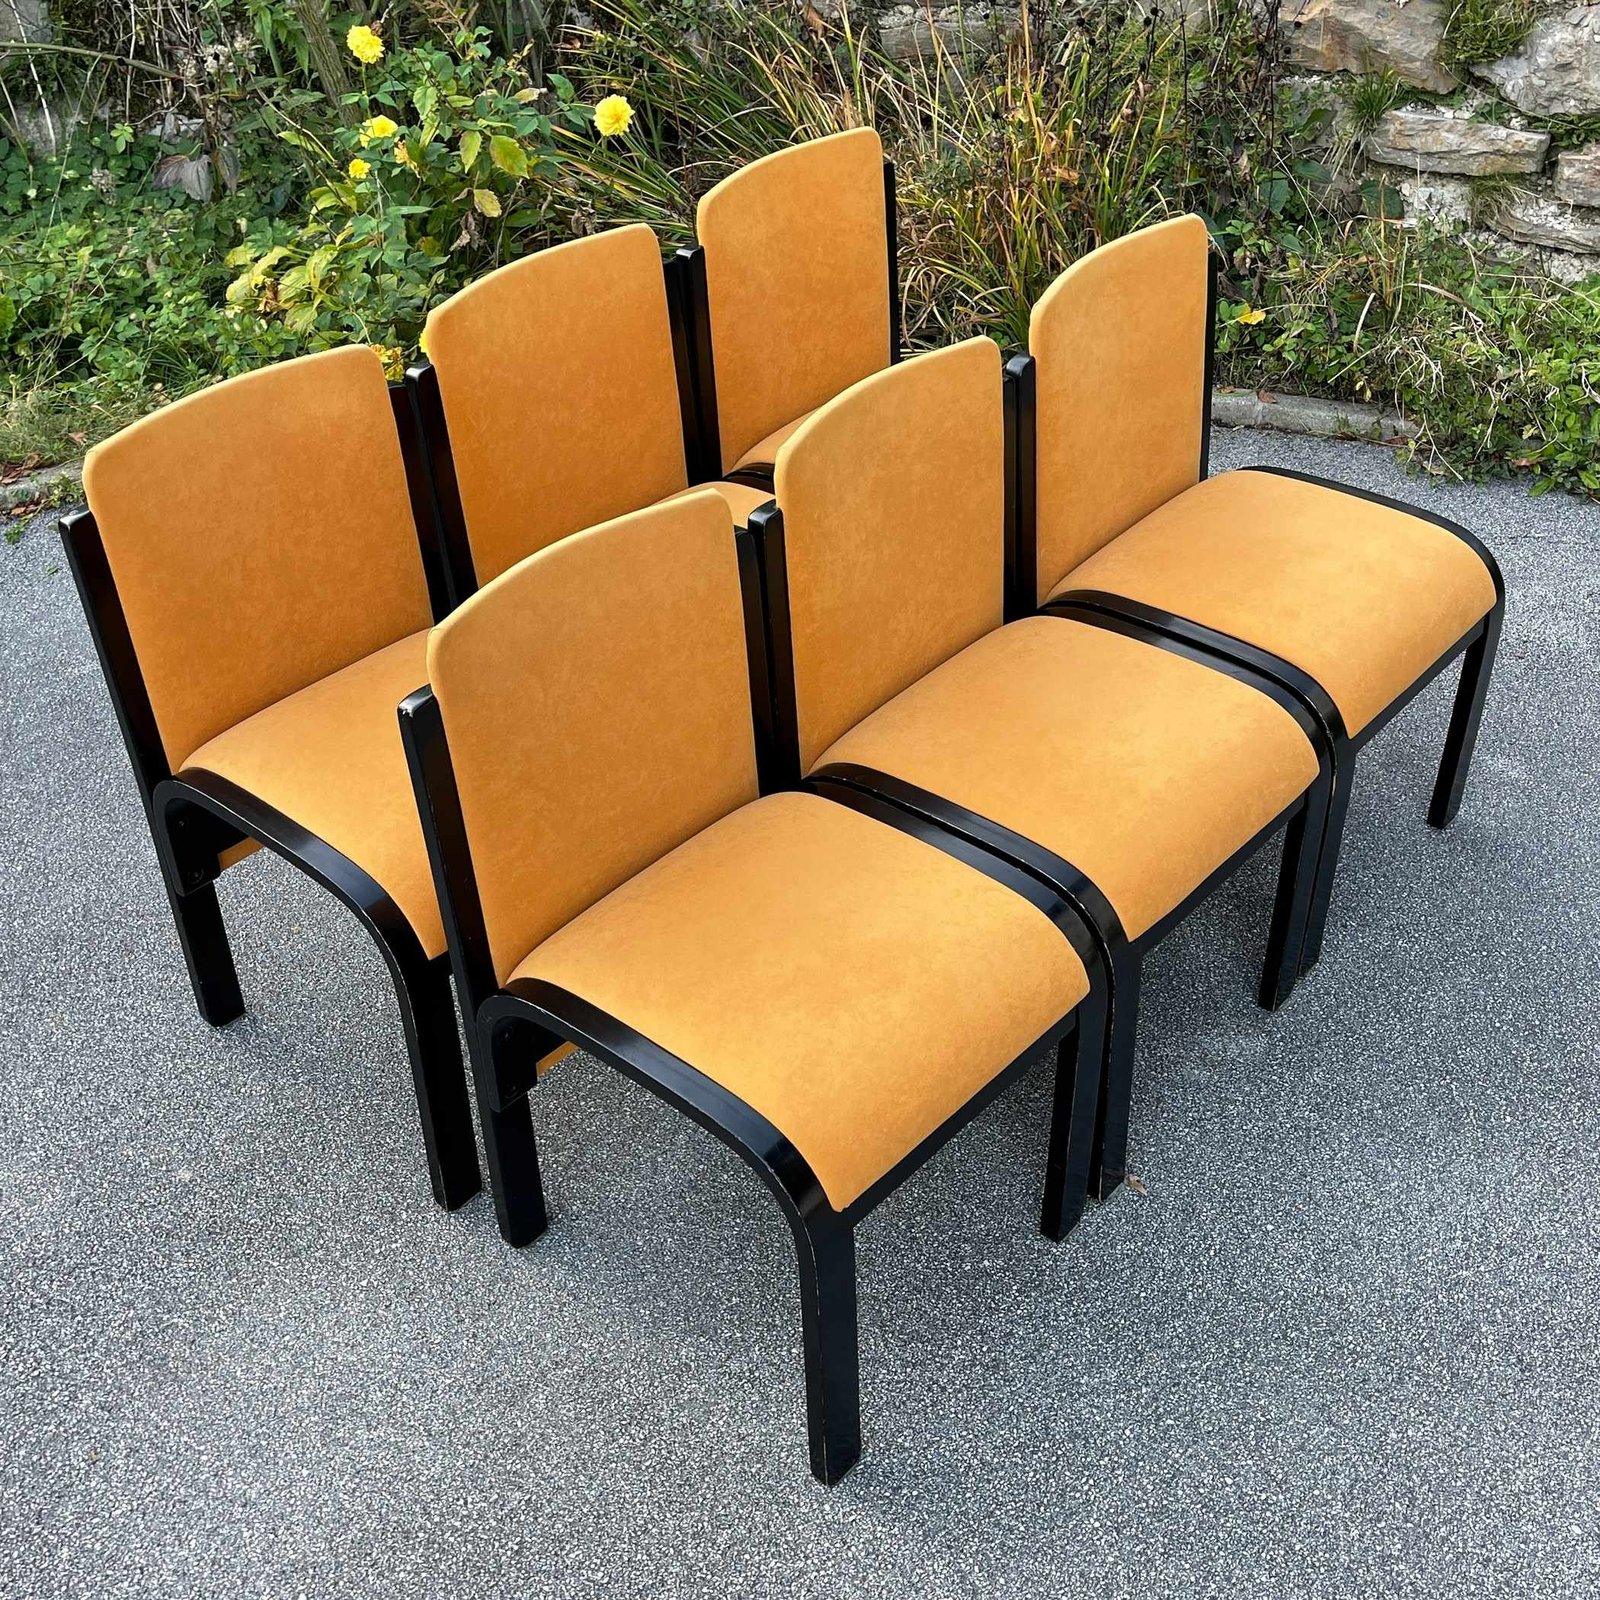 Set of 6 vintage orange dining chairs Italy 1980s Italian Design Mid-century Modern Chairs